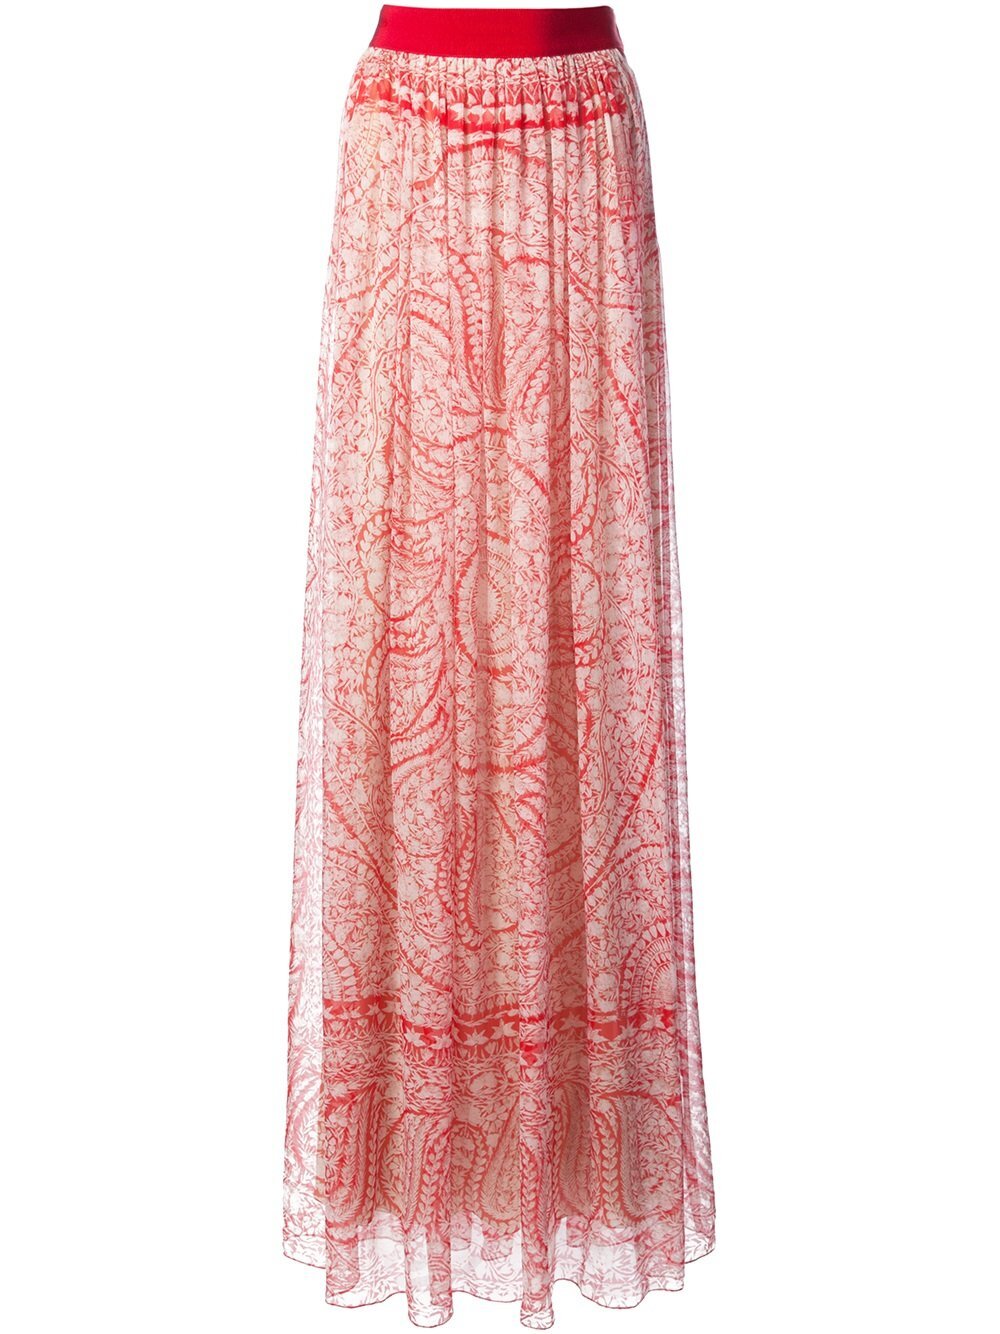 giambattista-valli-red-floral-print-skirt-product-1-20578567-4-469515675-normal.jpeg